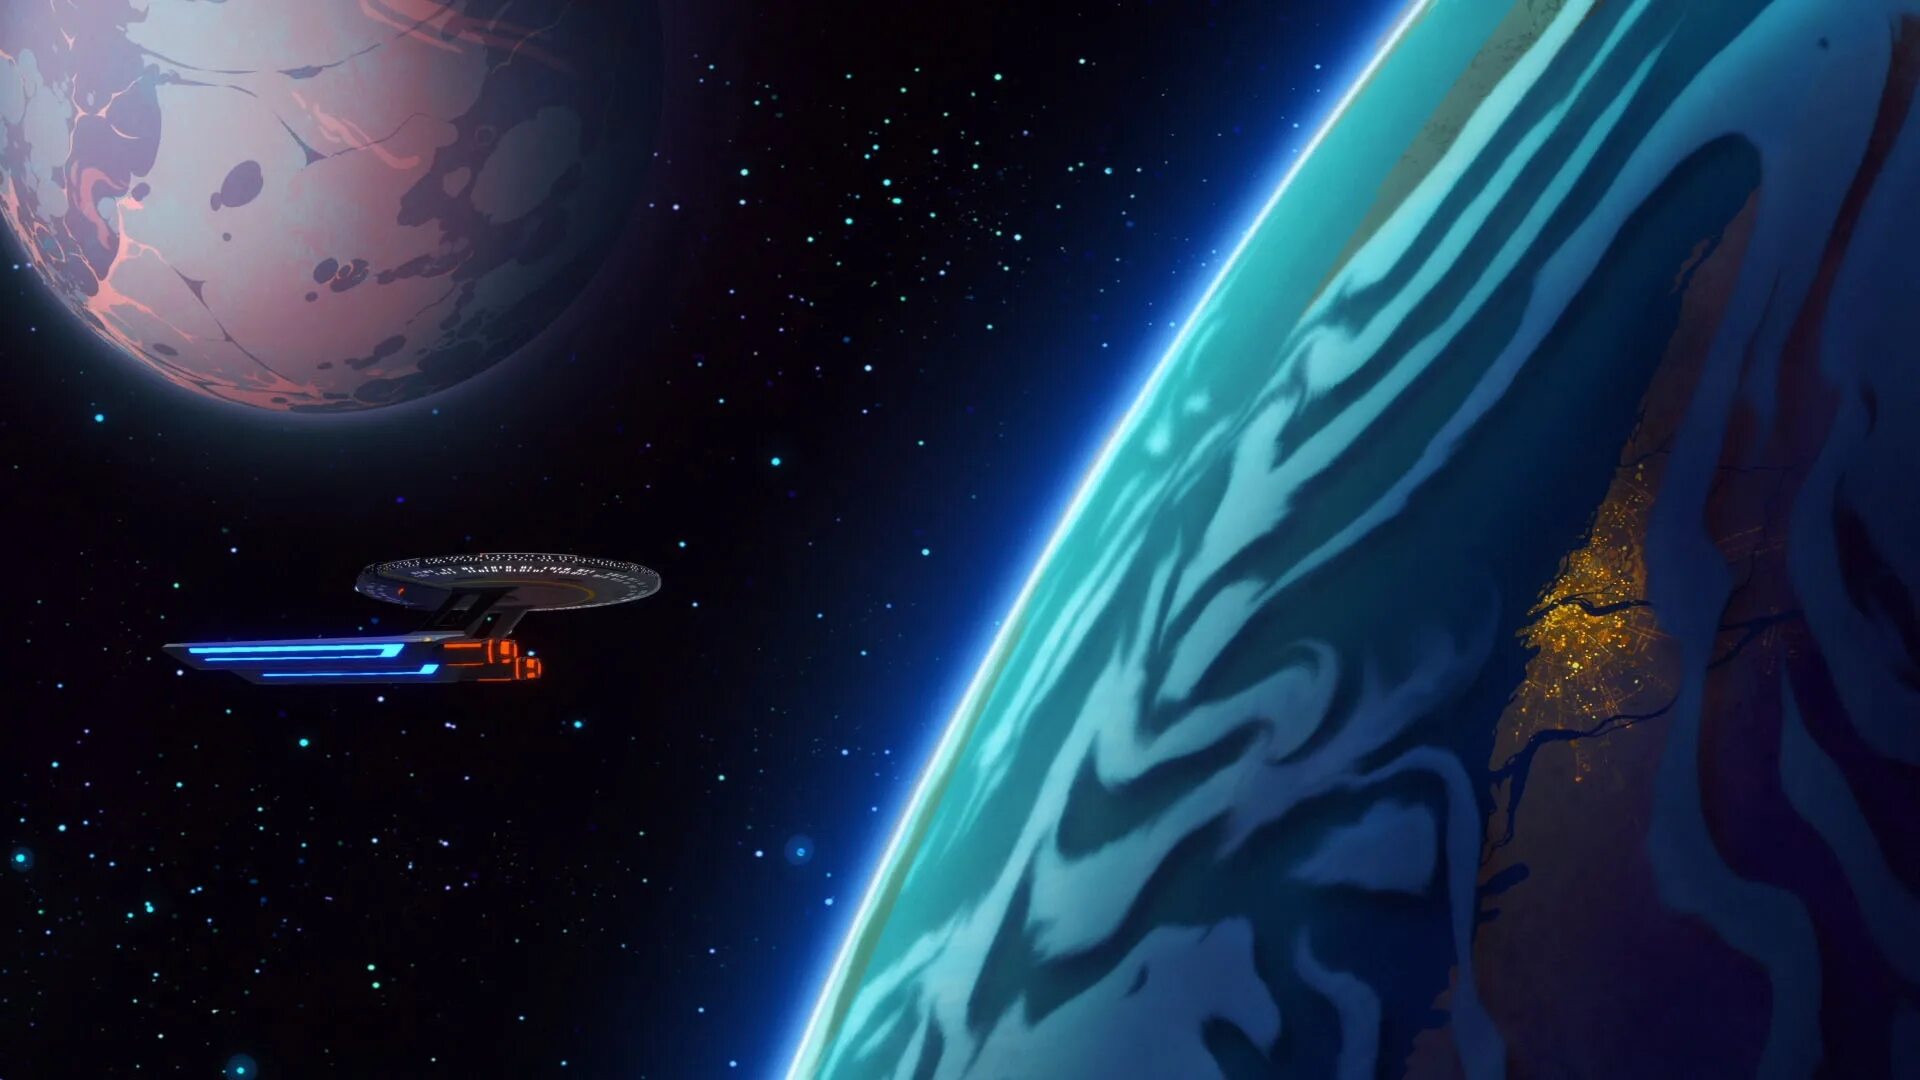 Стартрек палуба. Star Trek lower Decks. Беккет Маринер. USS Титан Стартрек.